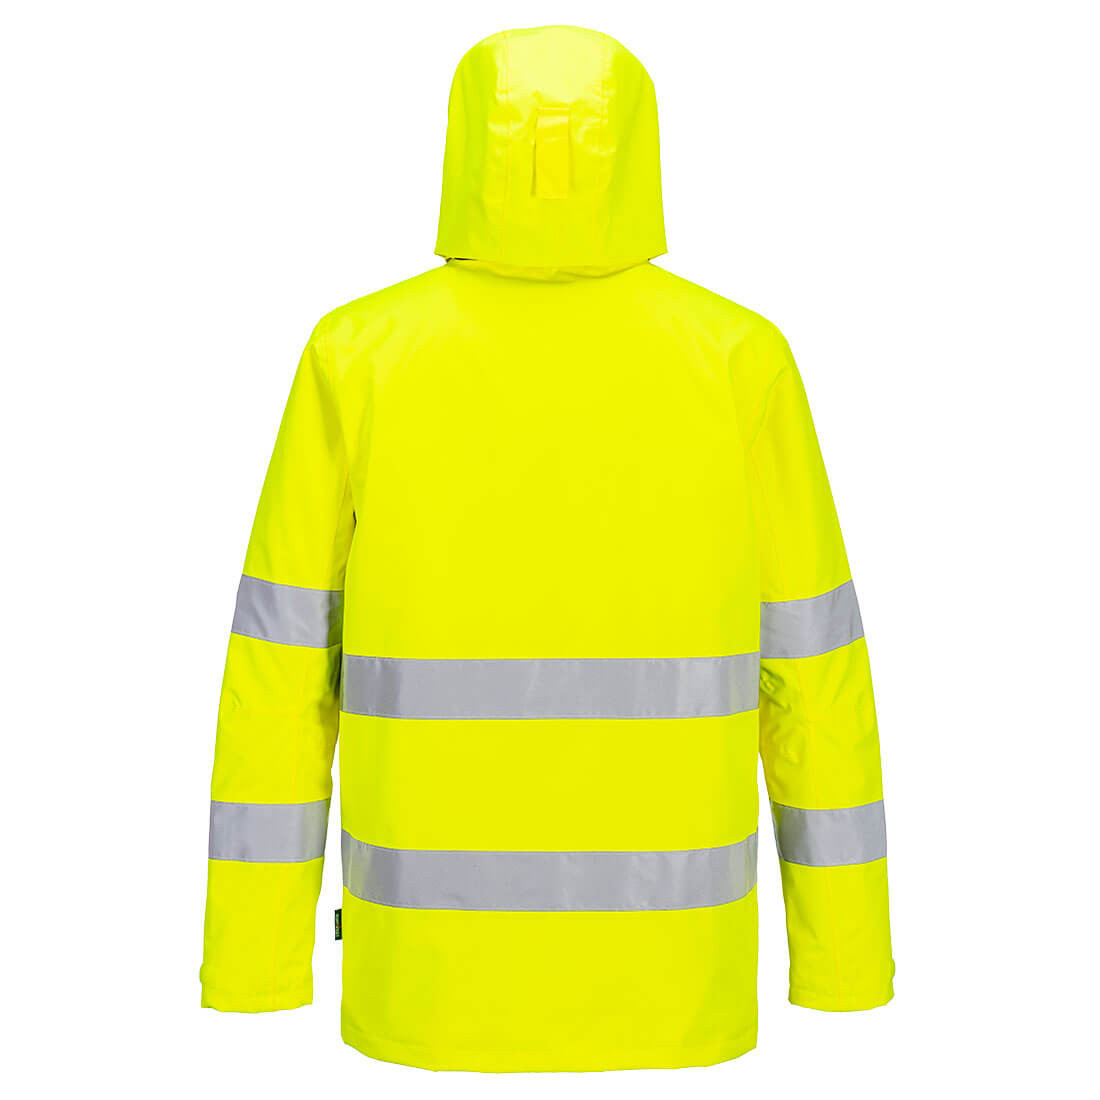 PW2 Warnschutz Regenjacke - Arbeitskleidung